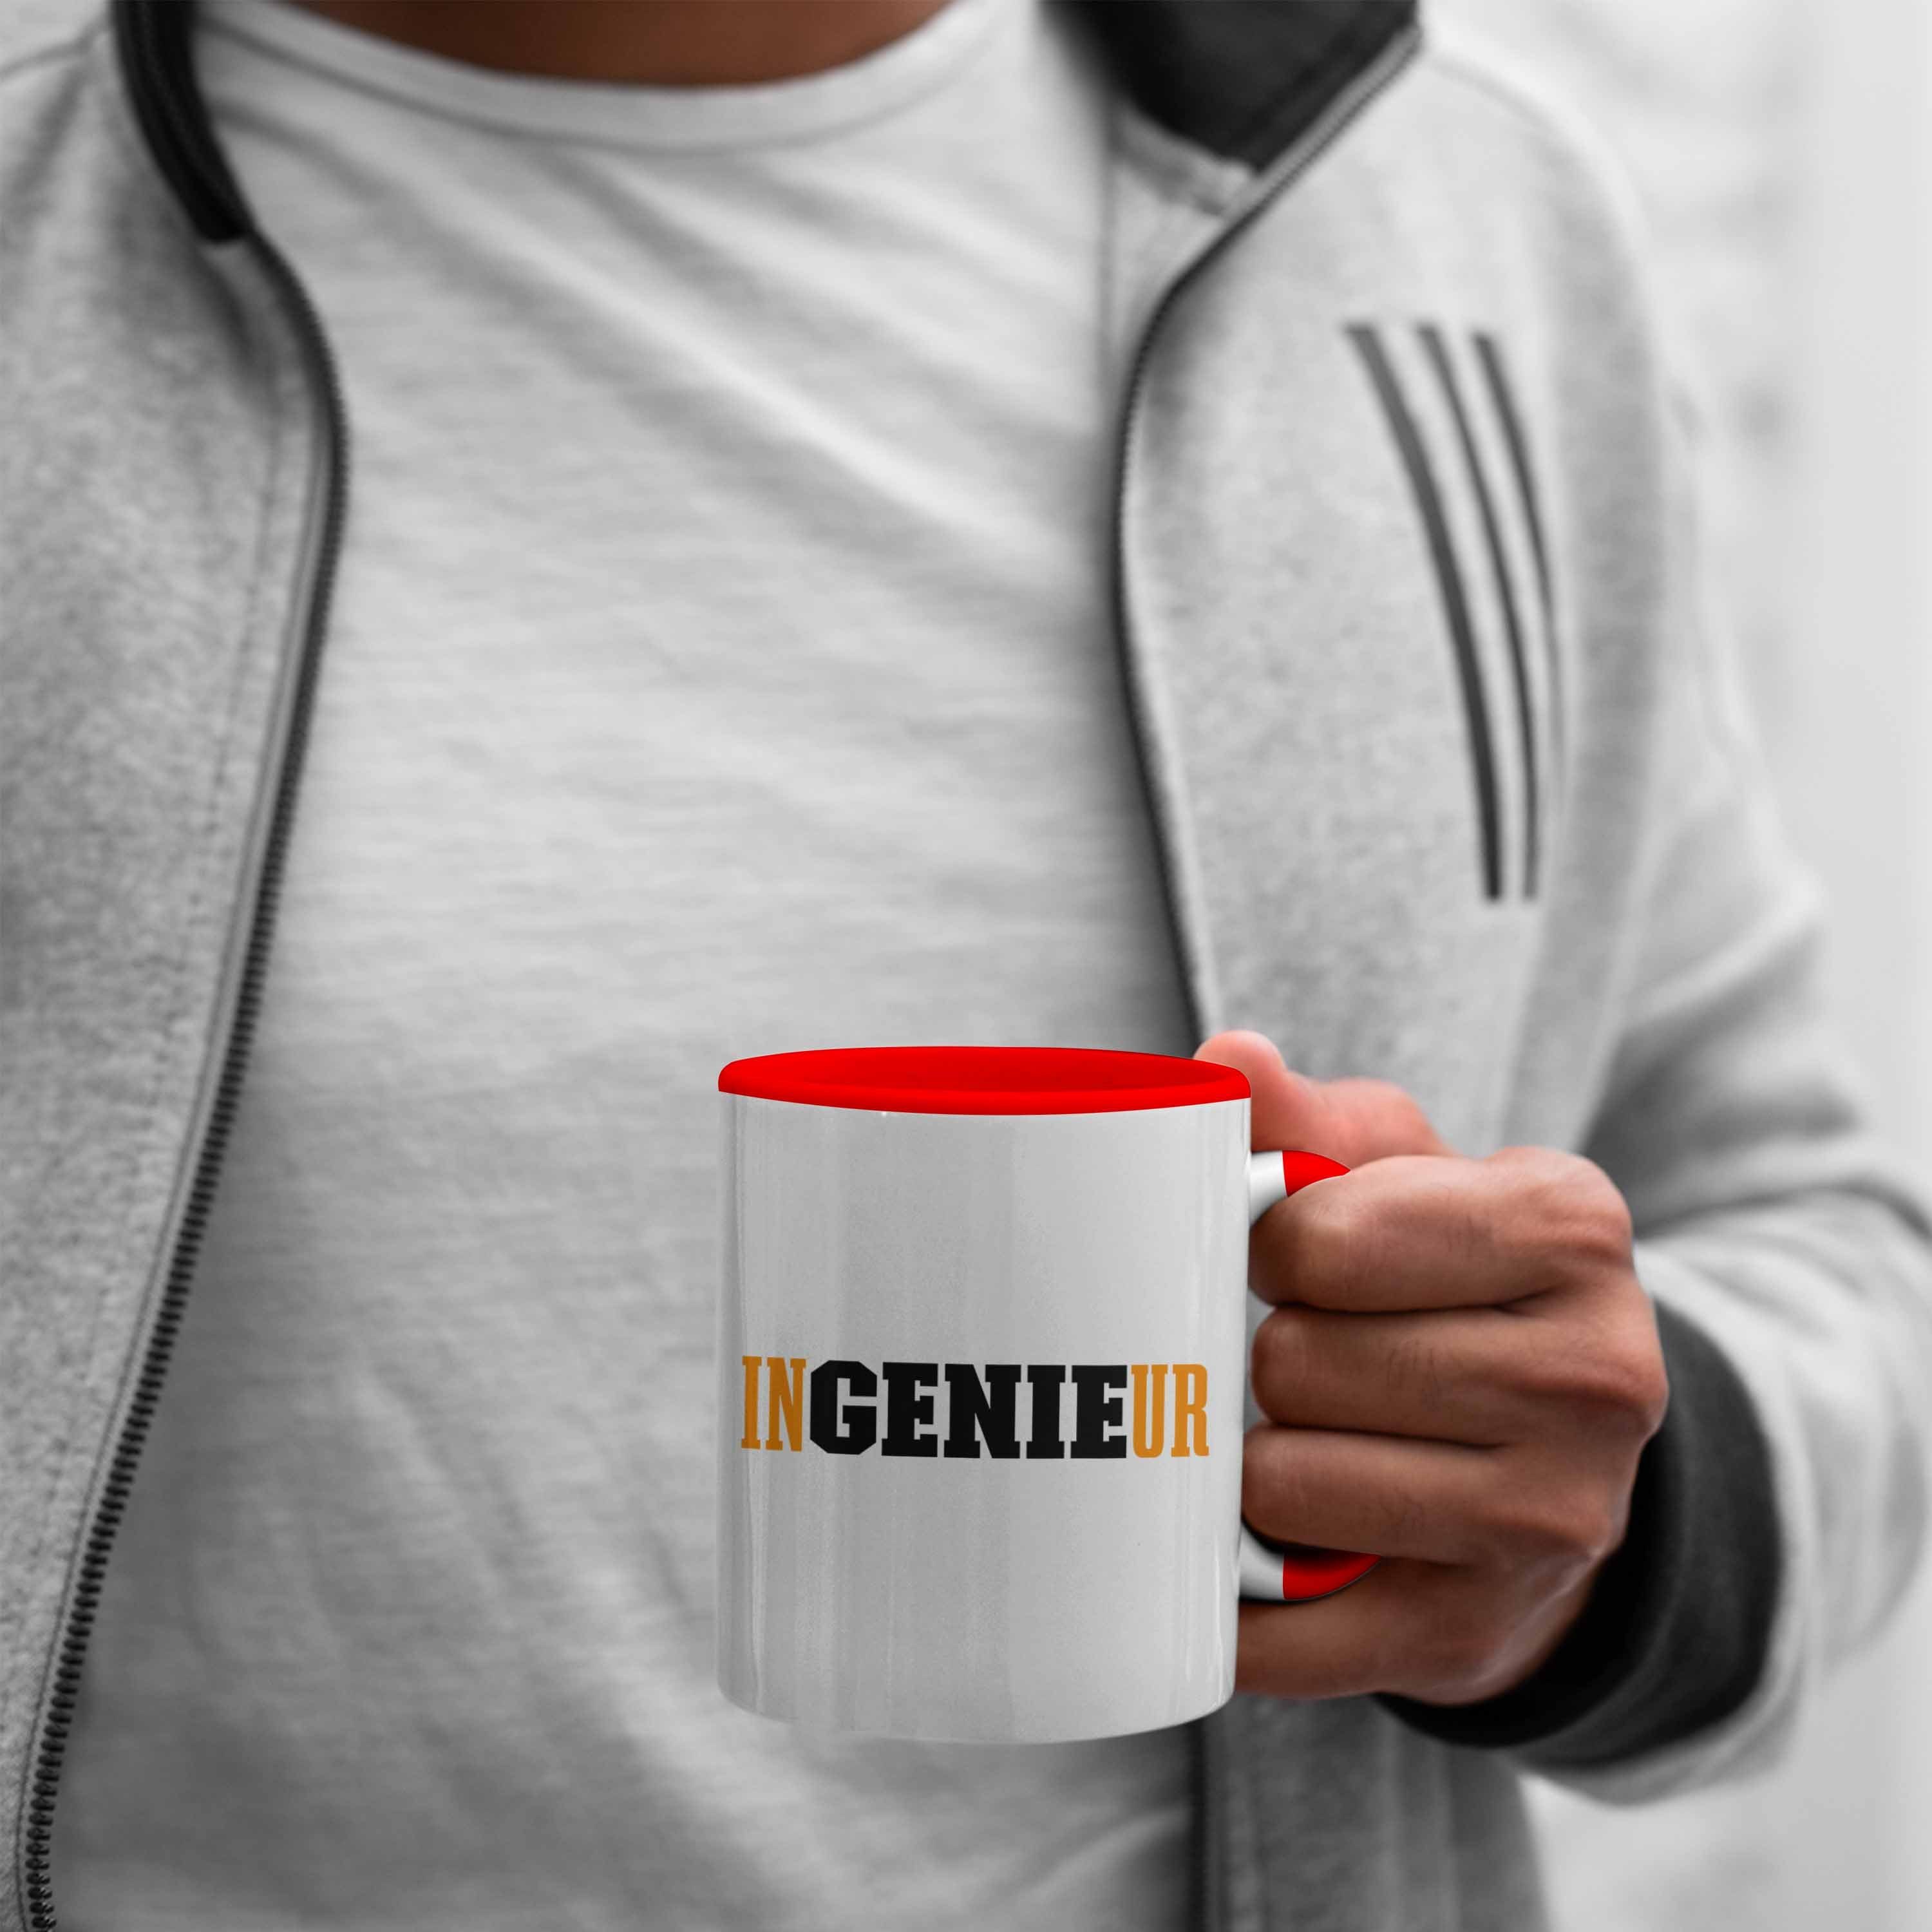 Ingenieur Trendation Kaffeetasse Gadget Tasse Geschenk Trendation Ingeneur Geschenkidee - Rot Tasse